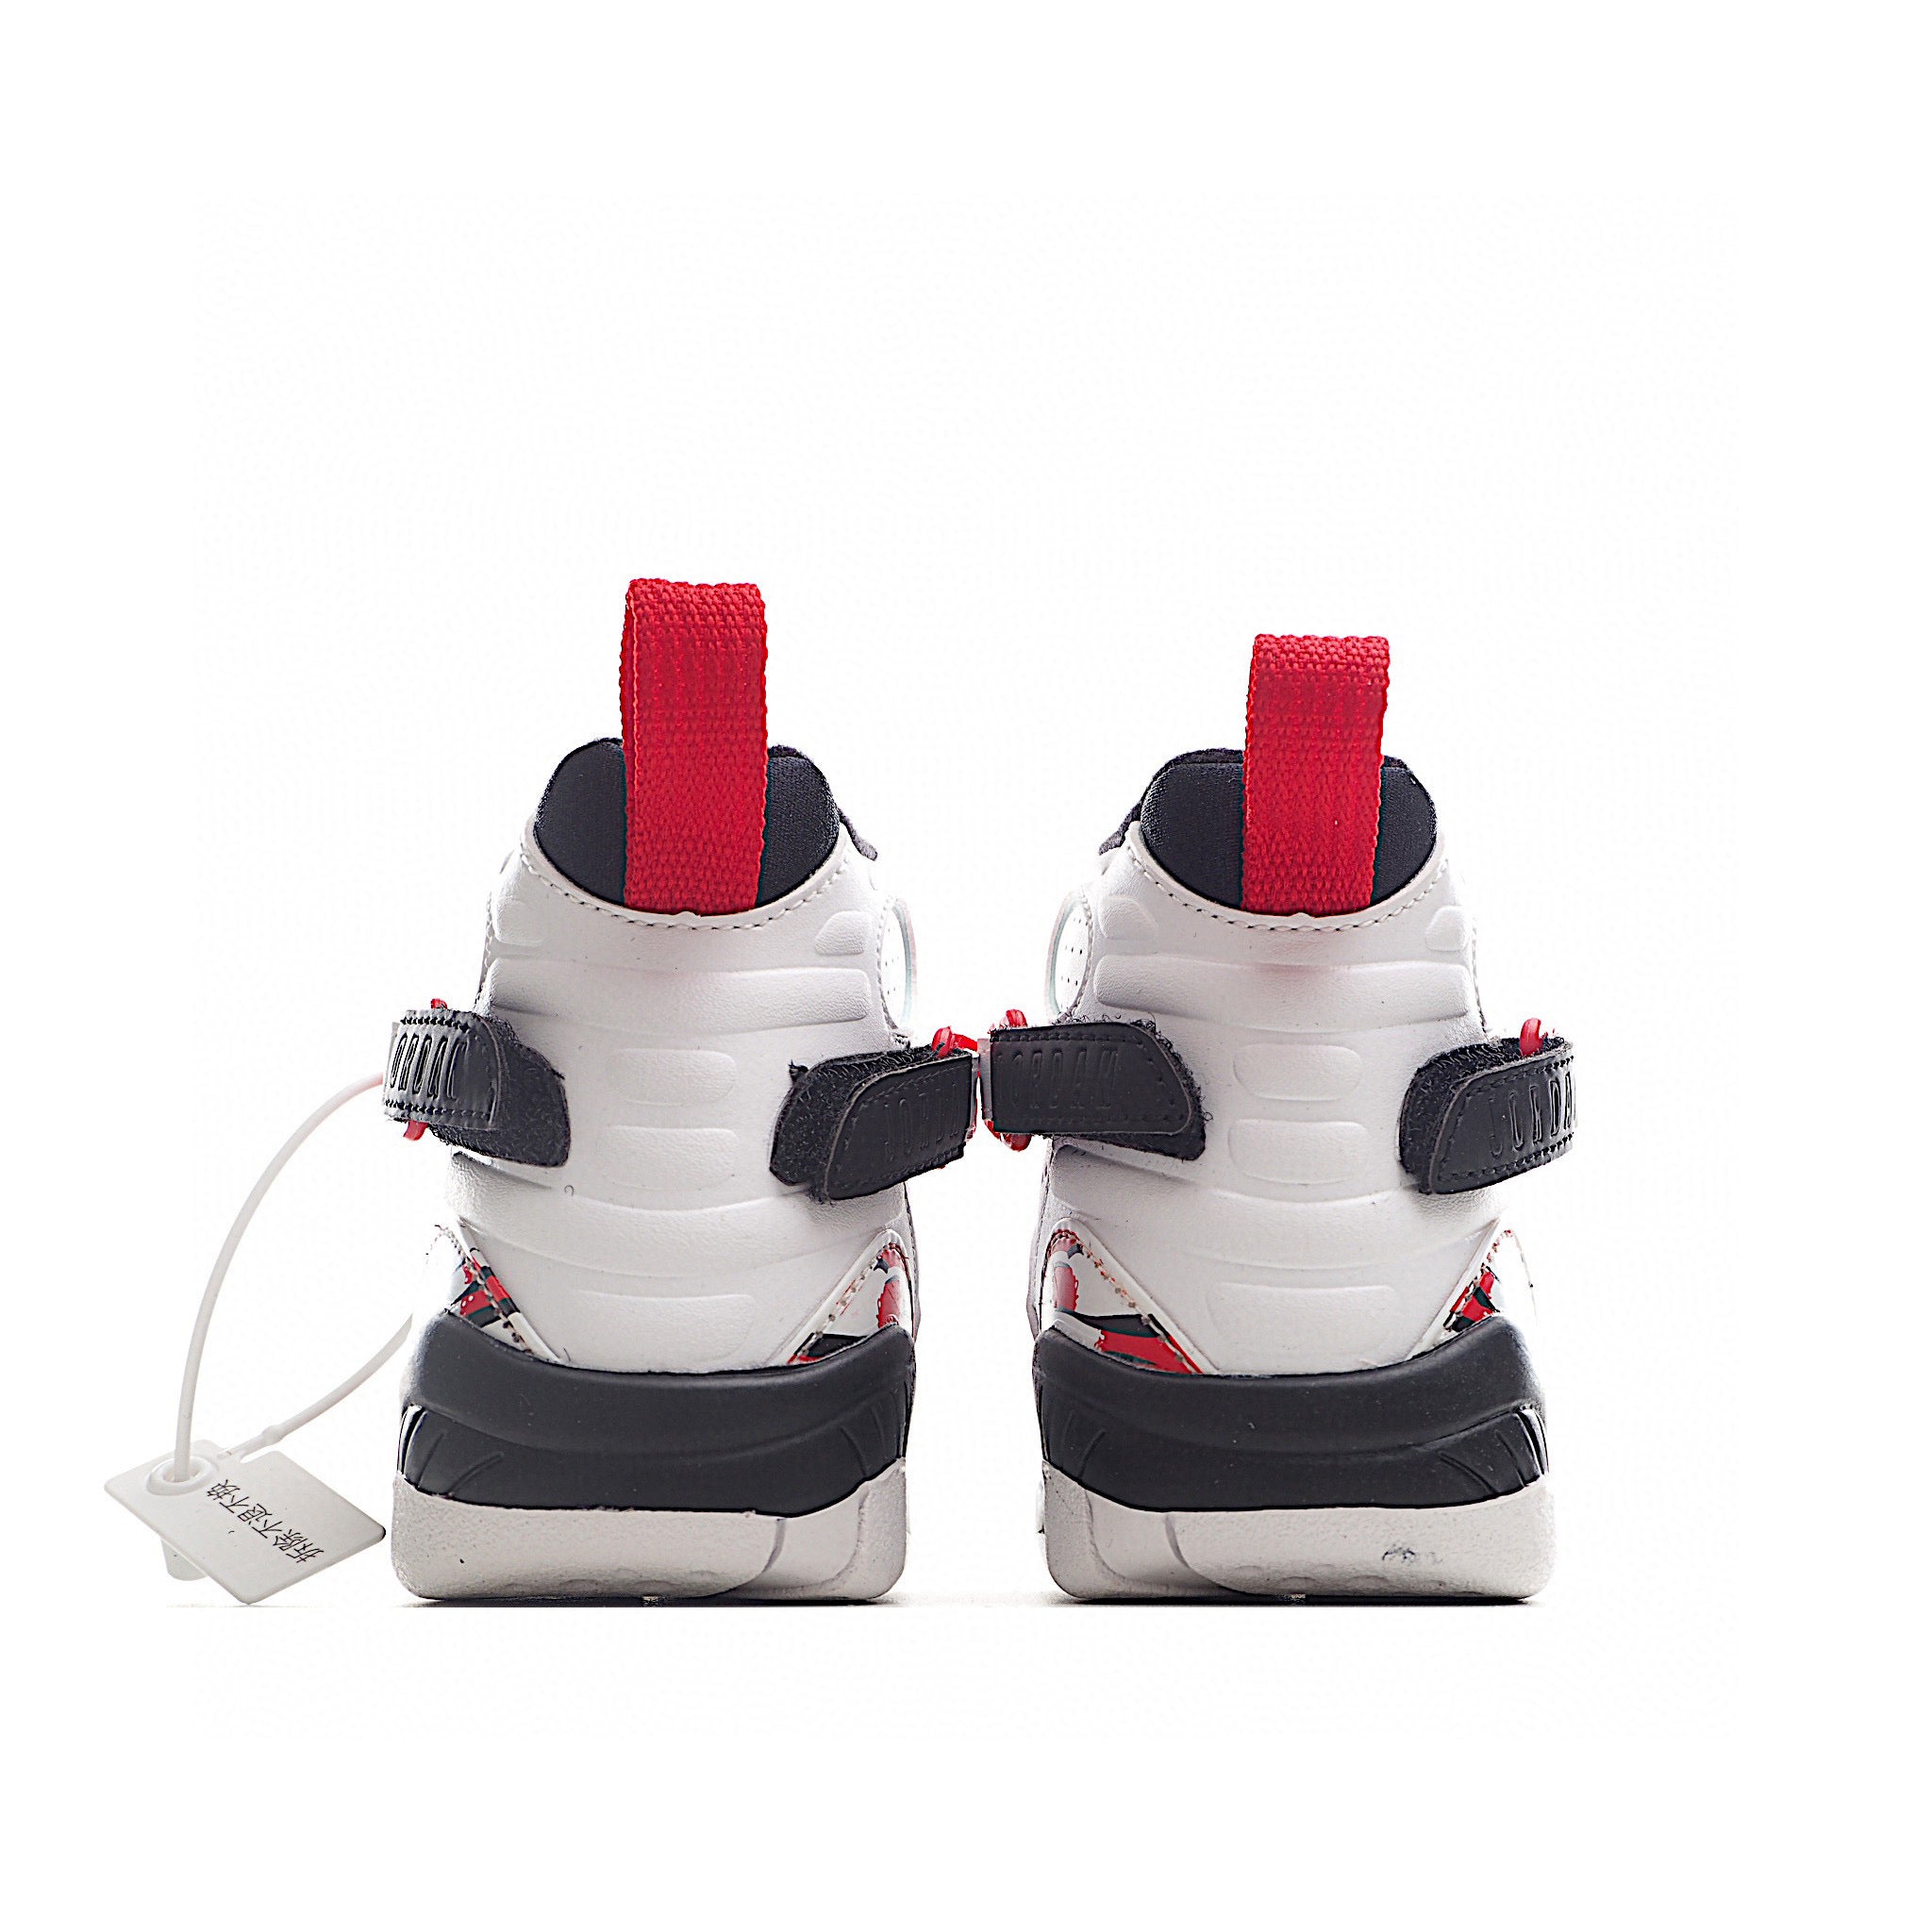 Nike air jordan 8 retro white red shoes